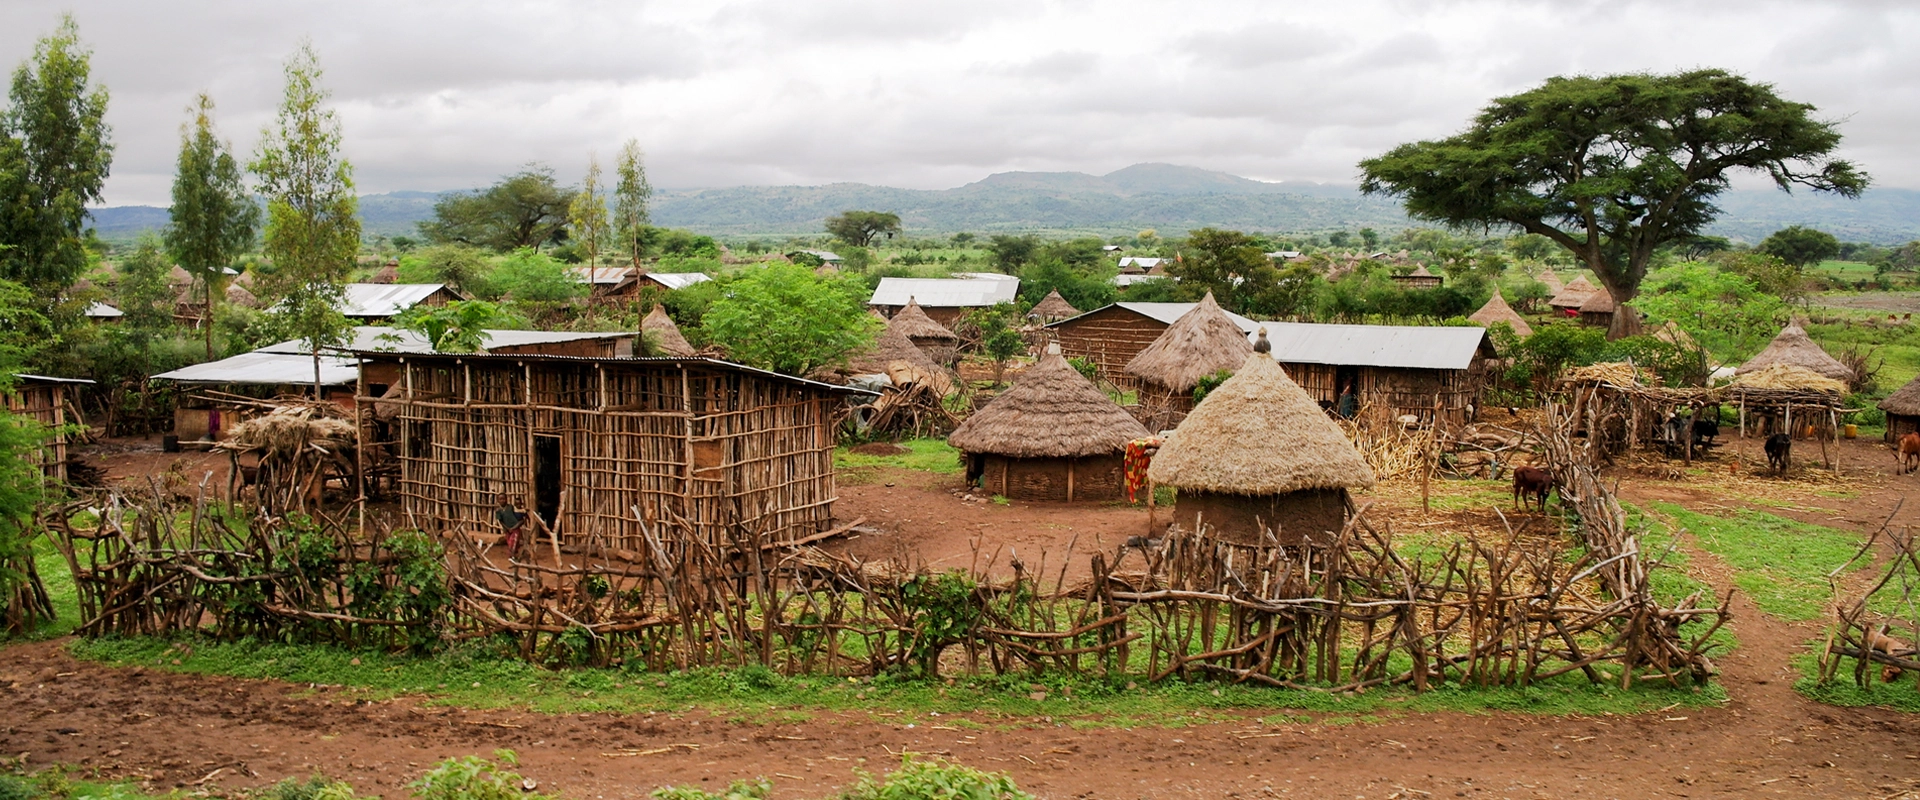 Circuit ethiopie pension complete village konso